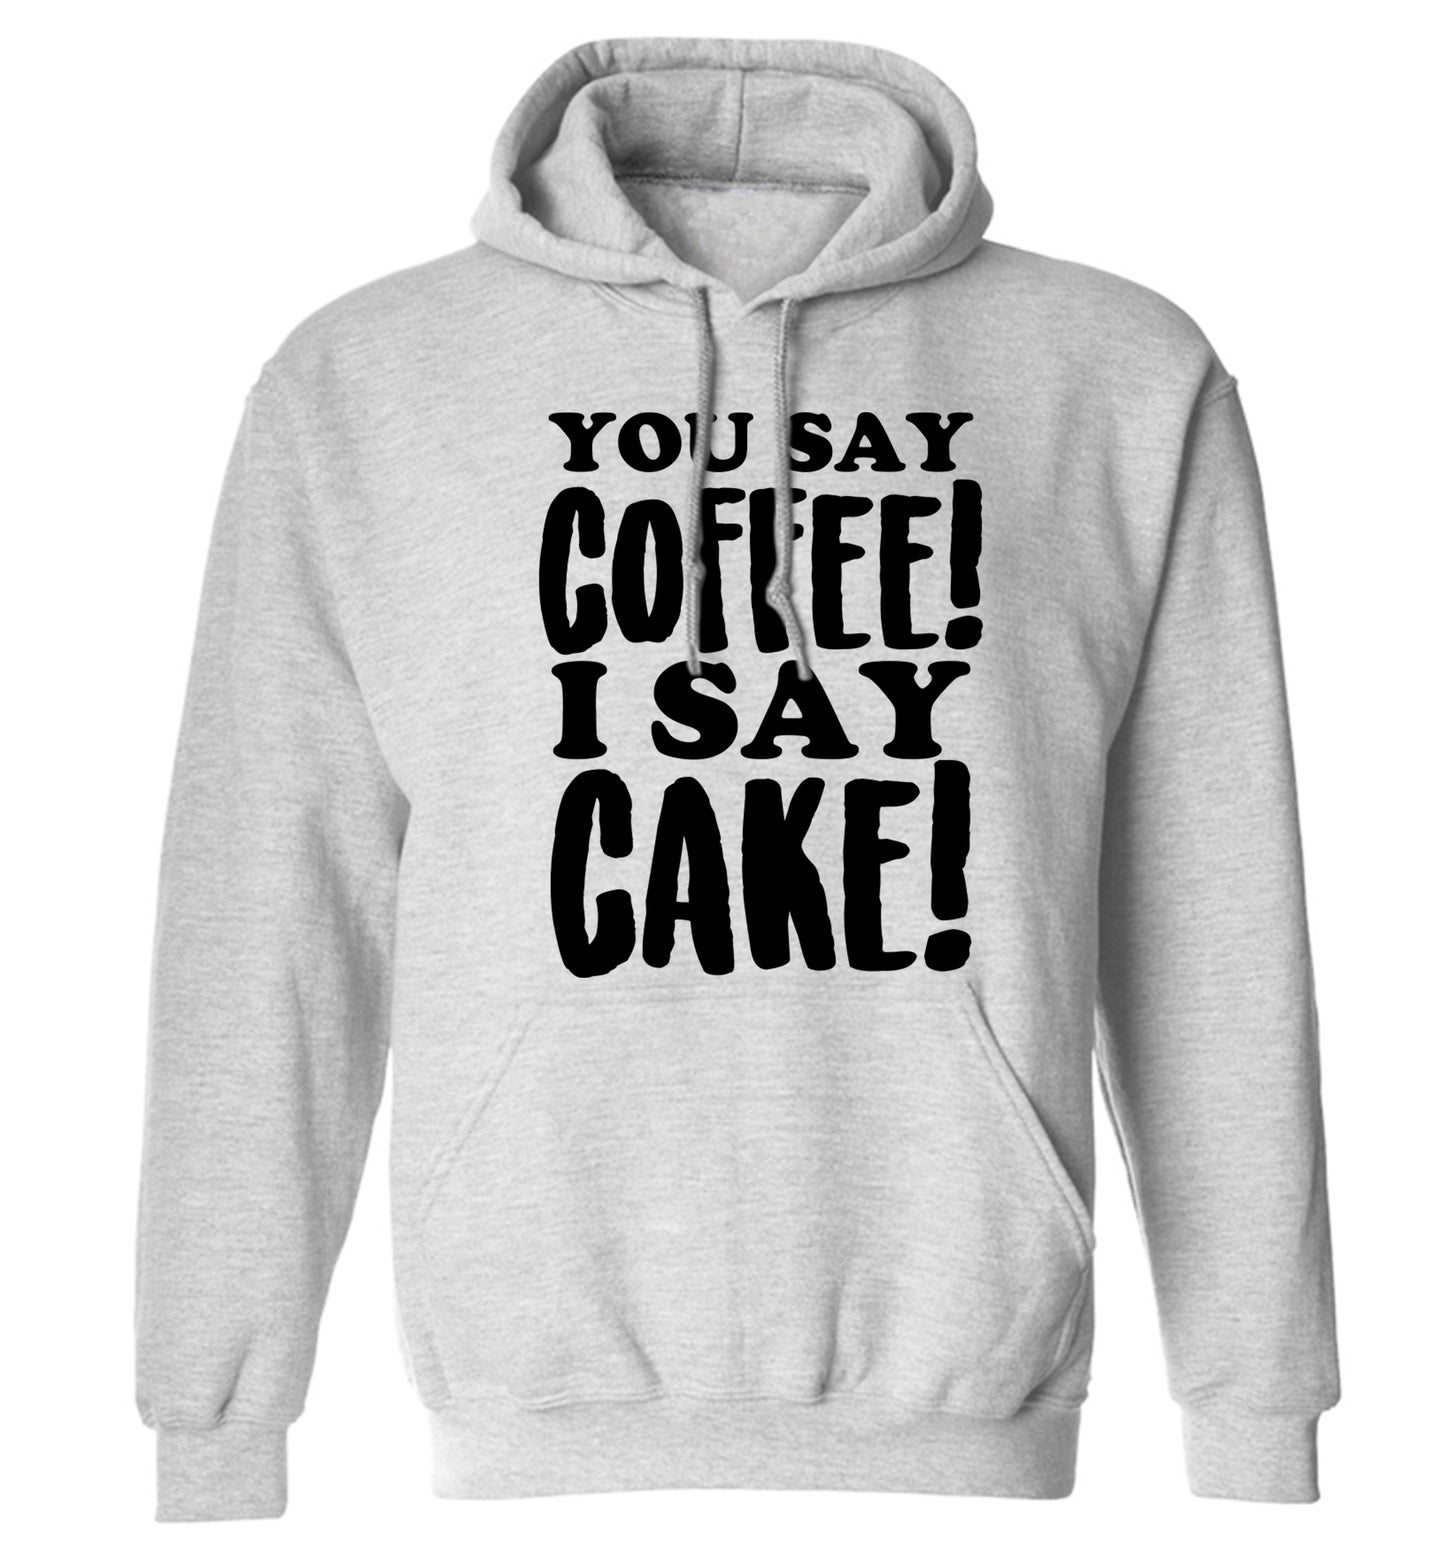 You say coffee I say cake! adults unisex grey hoodie 2XL